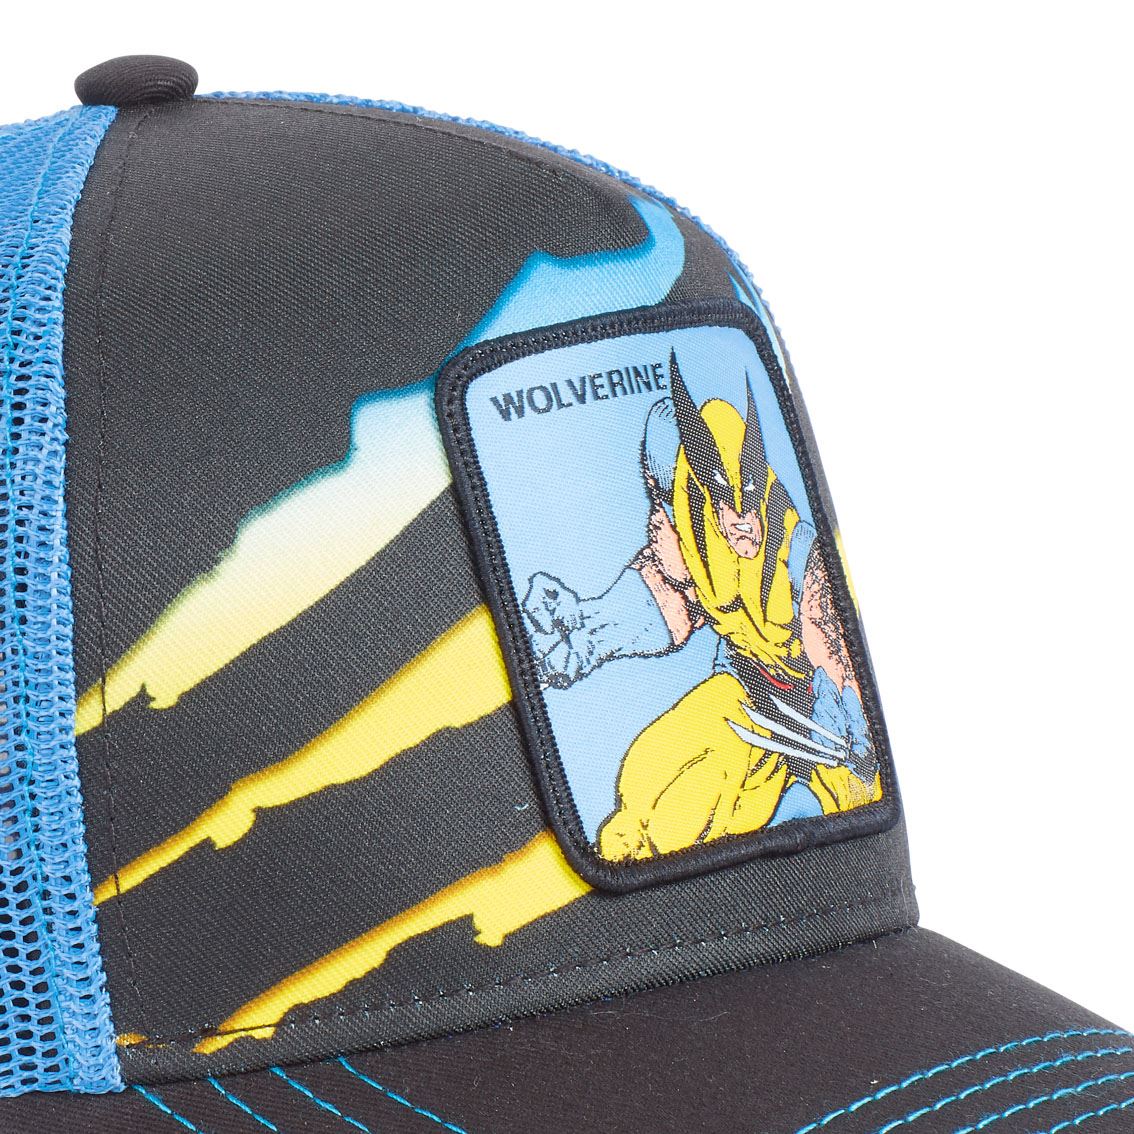 Wolverine Marvel Black Blue Trucker Cap Capslab